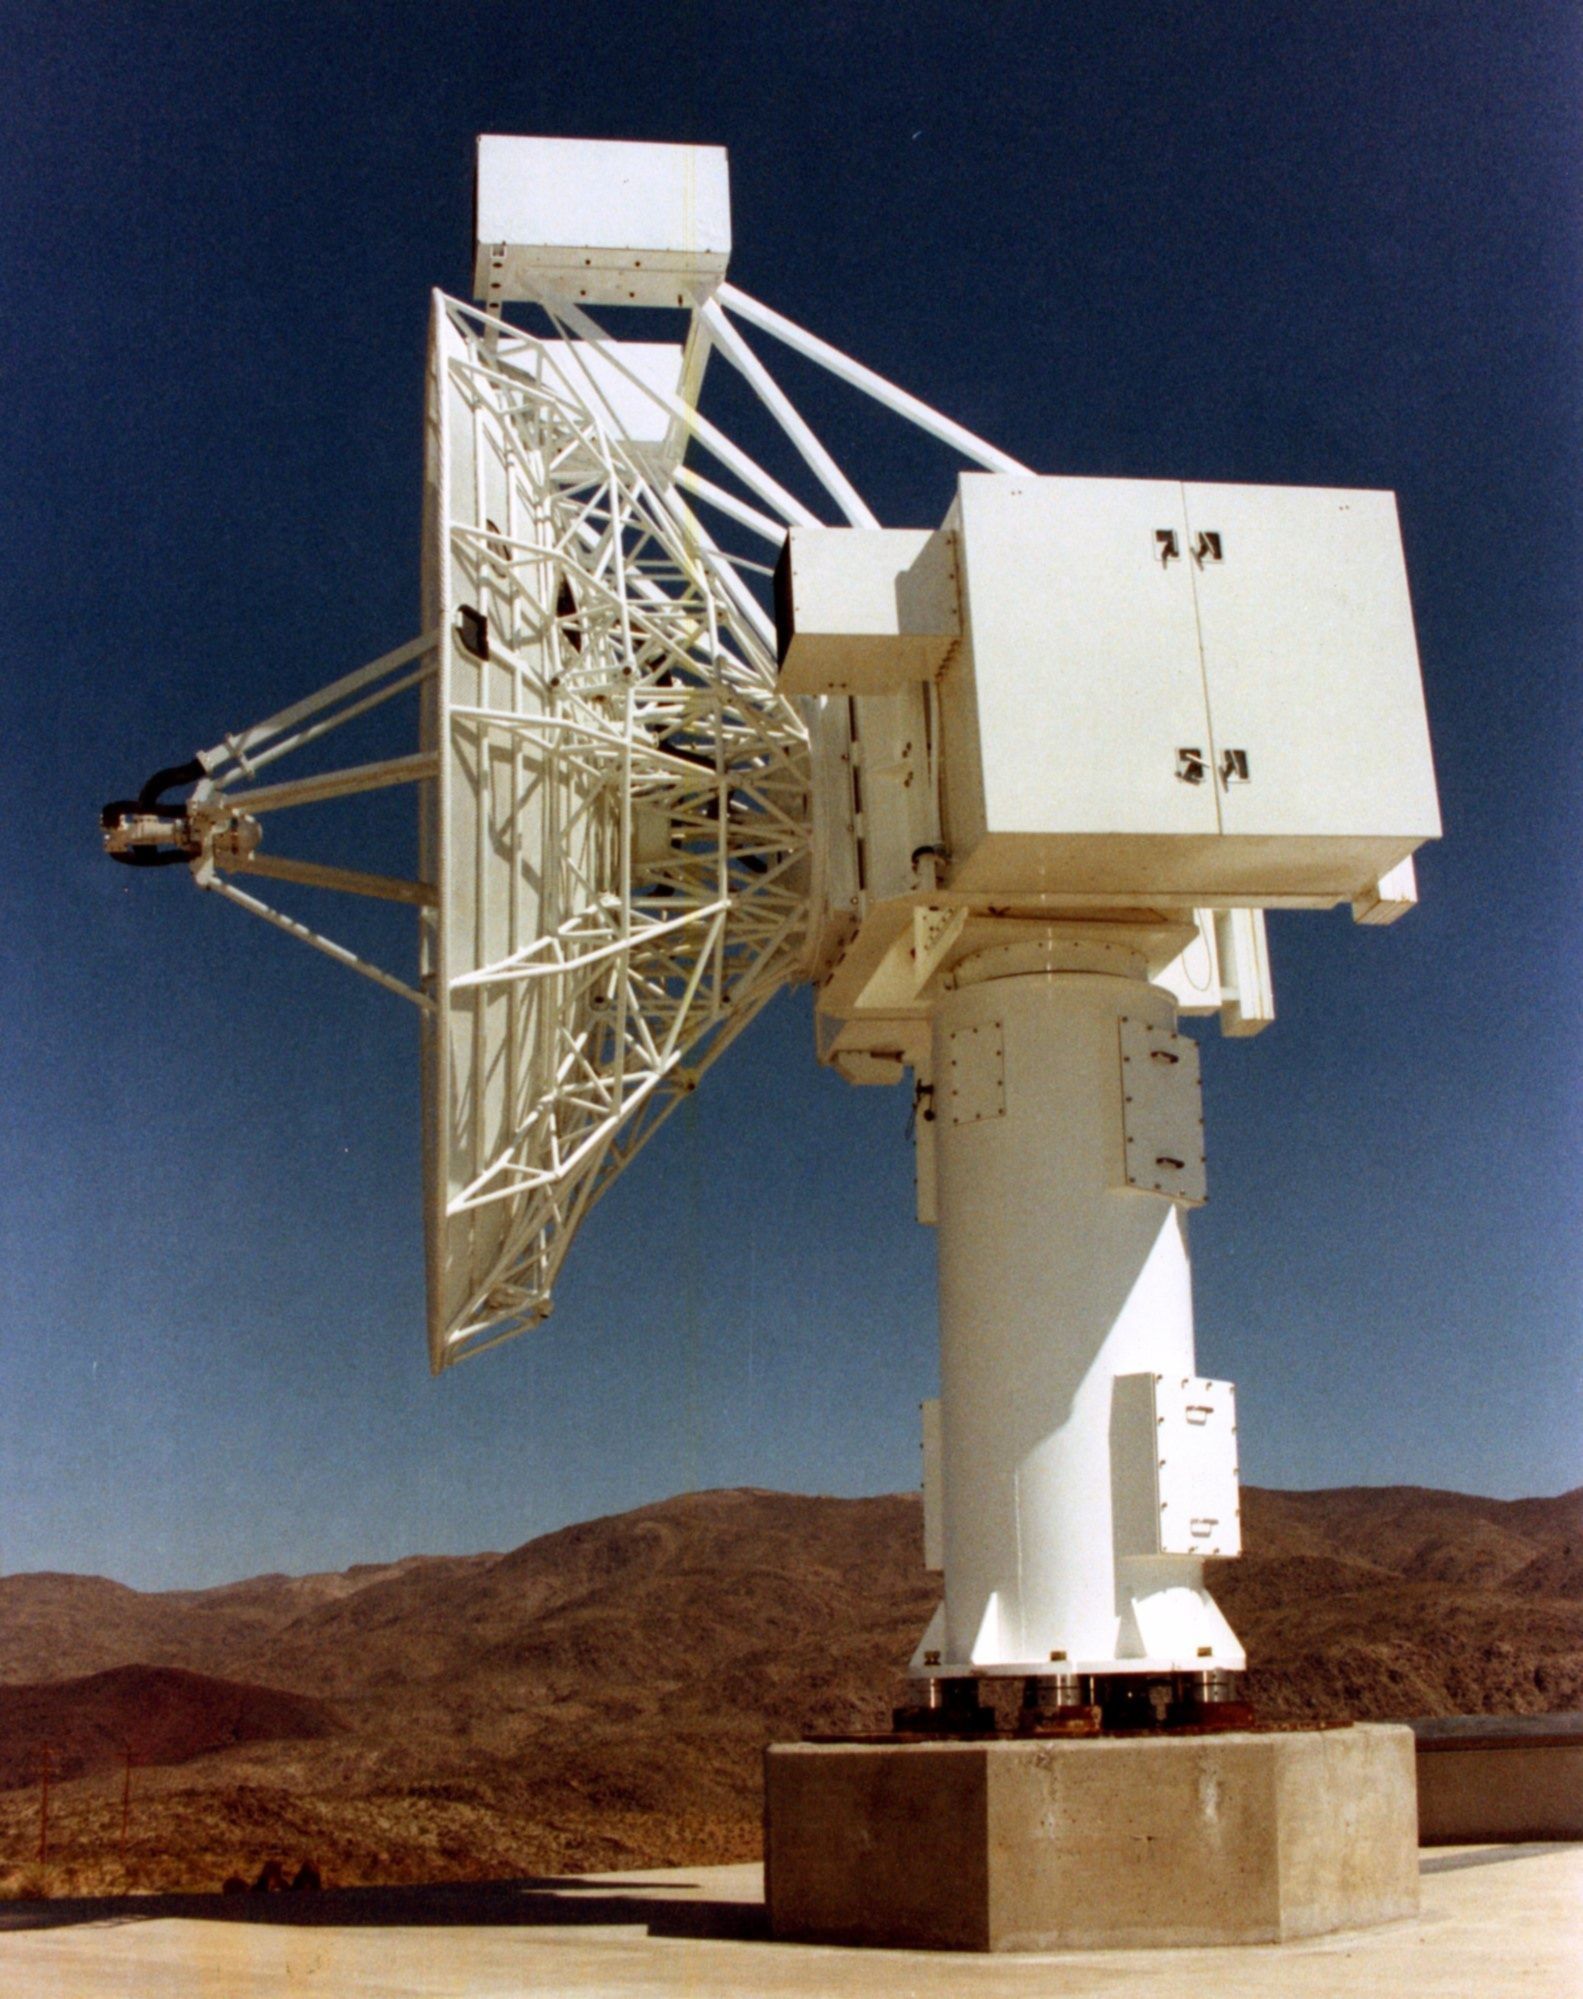 S-Band Precision Range Radar